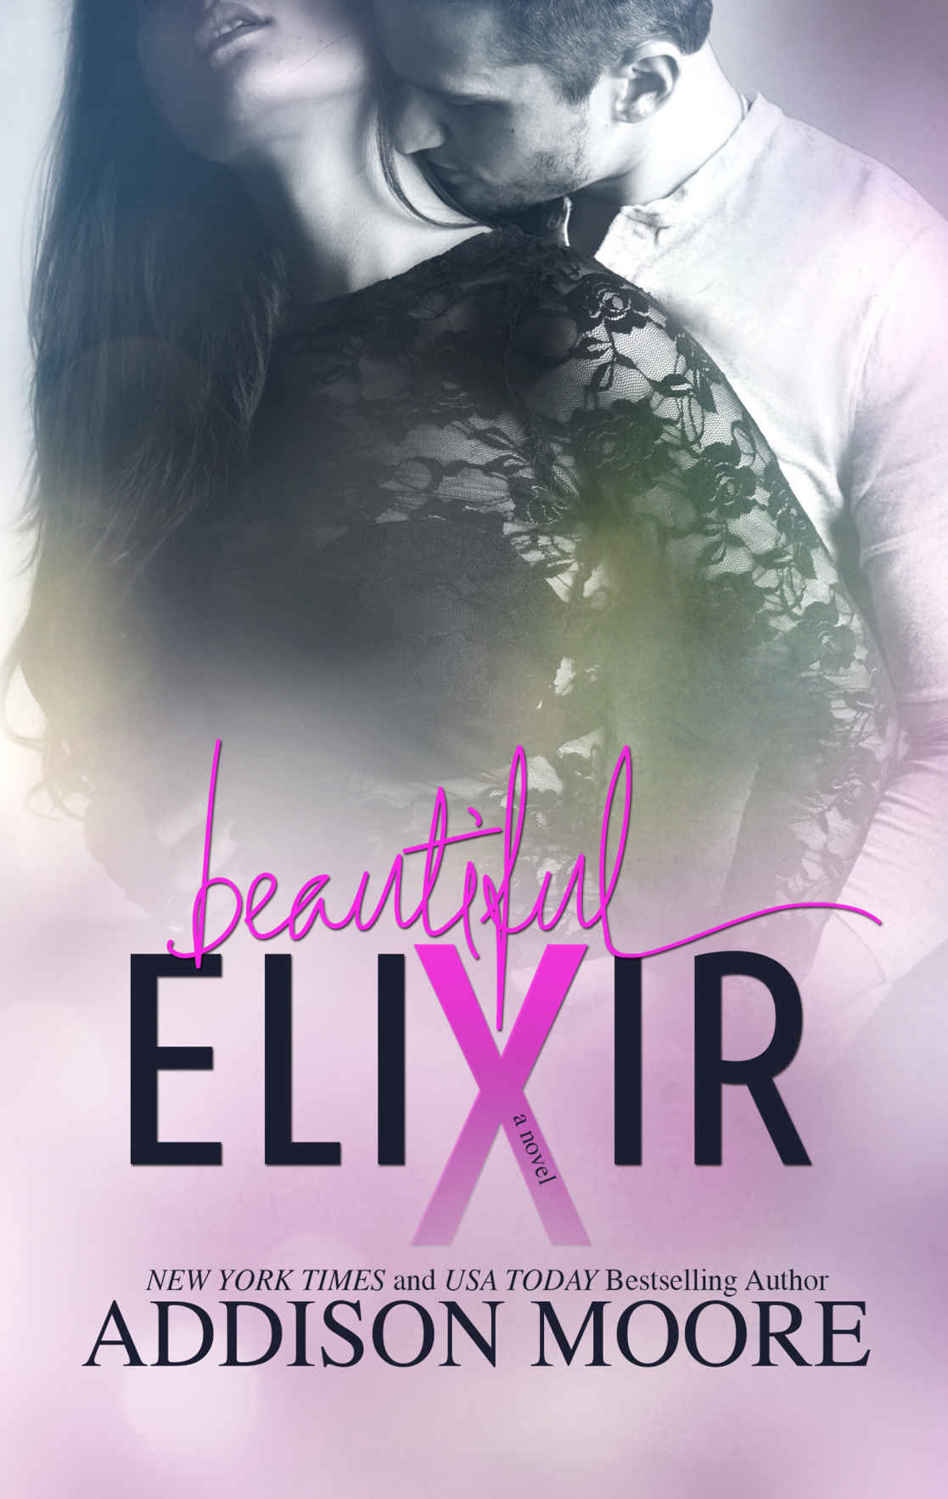 Beautiful Elixir (Beautiful Oblivion #3) by Addison Moore